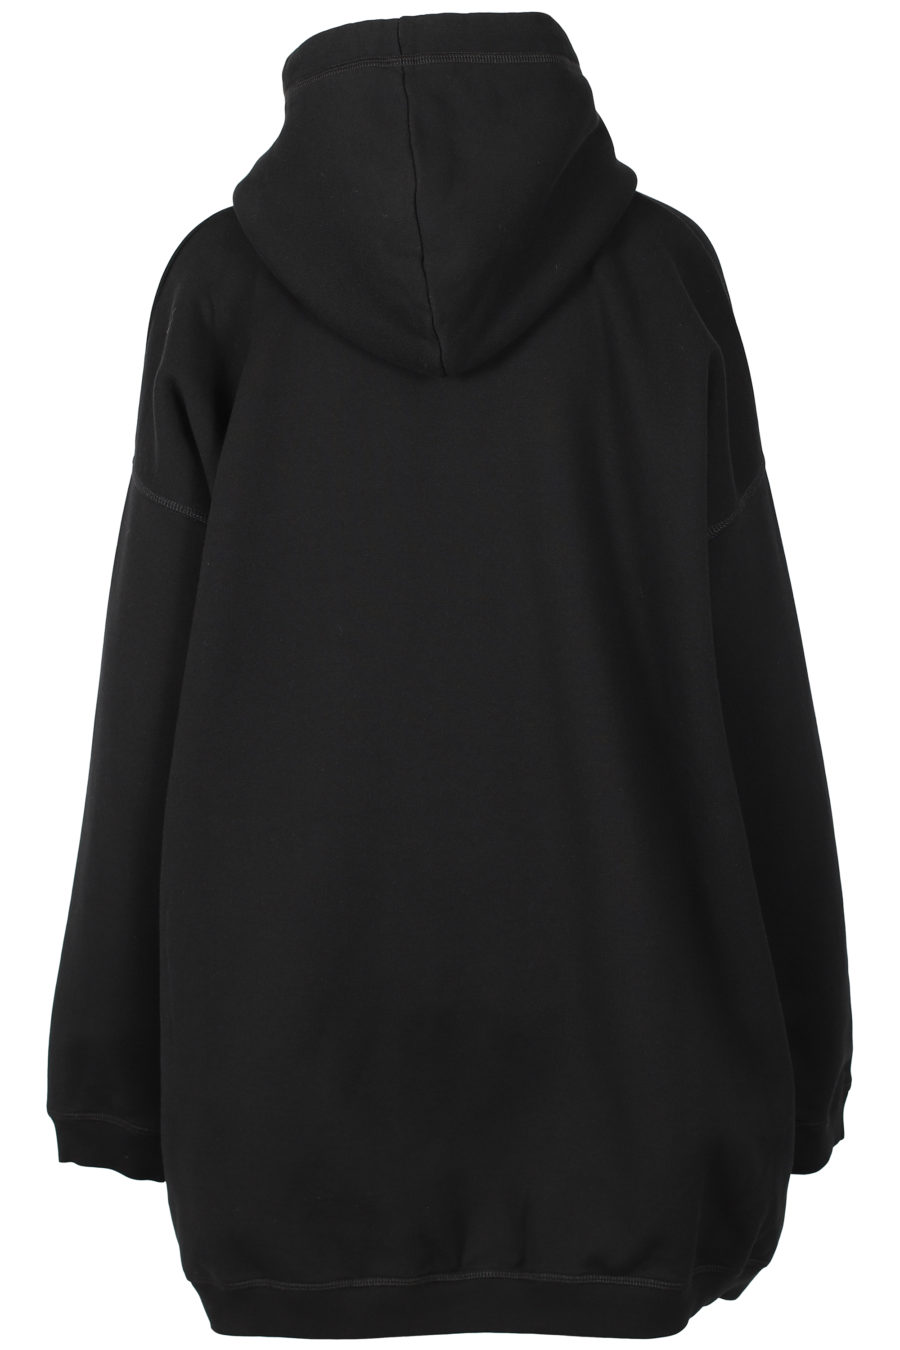 Robe en sweat-shirt noir avec logo blanc - IMG 3253